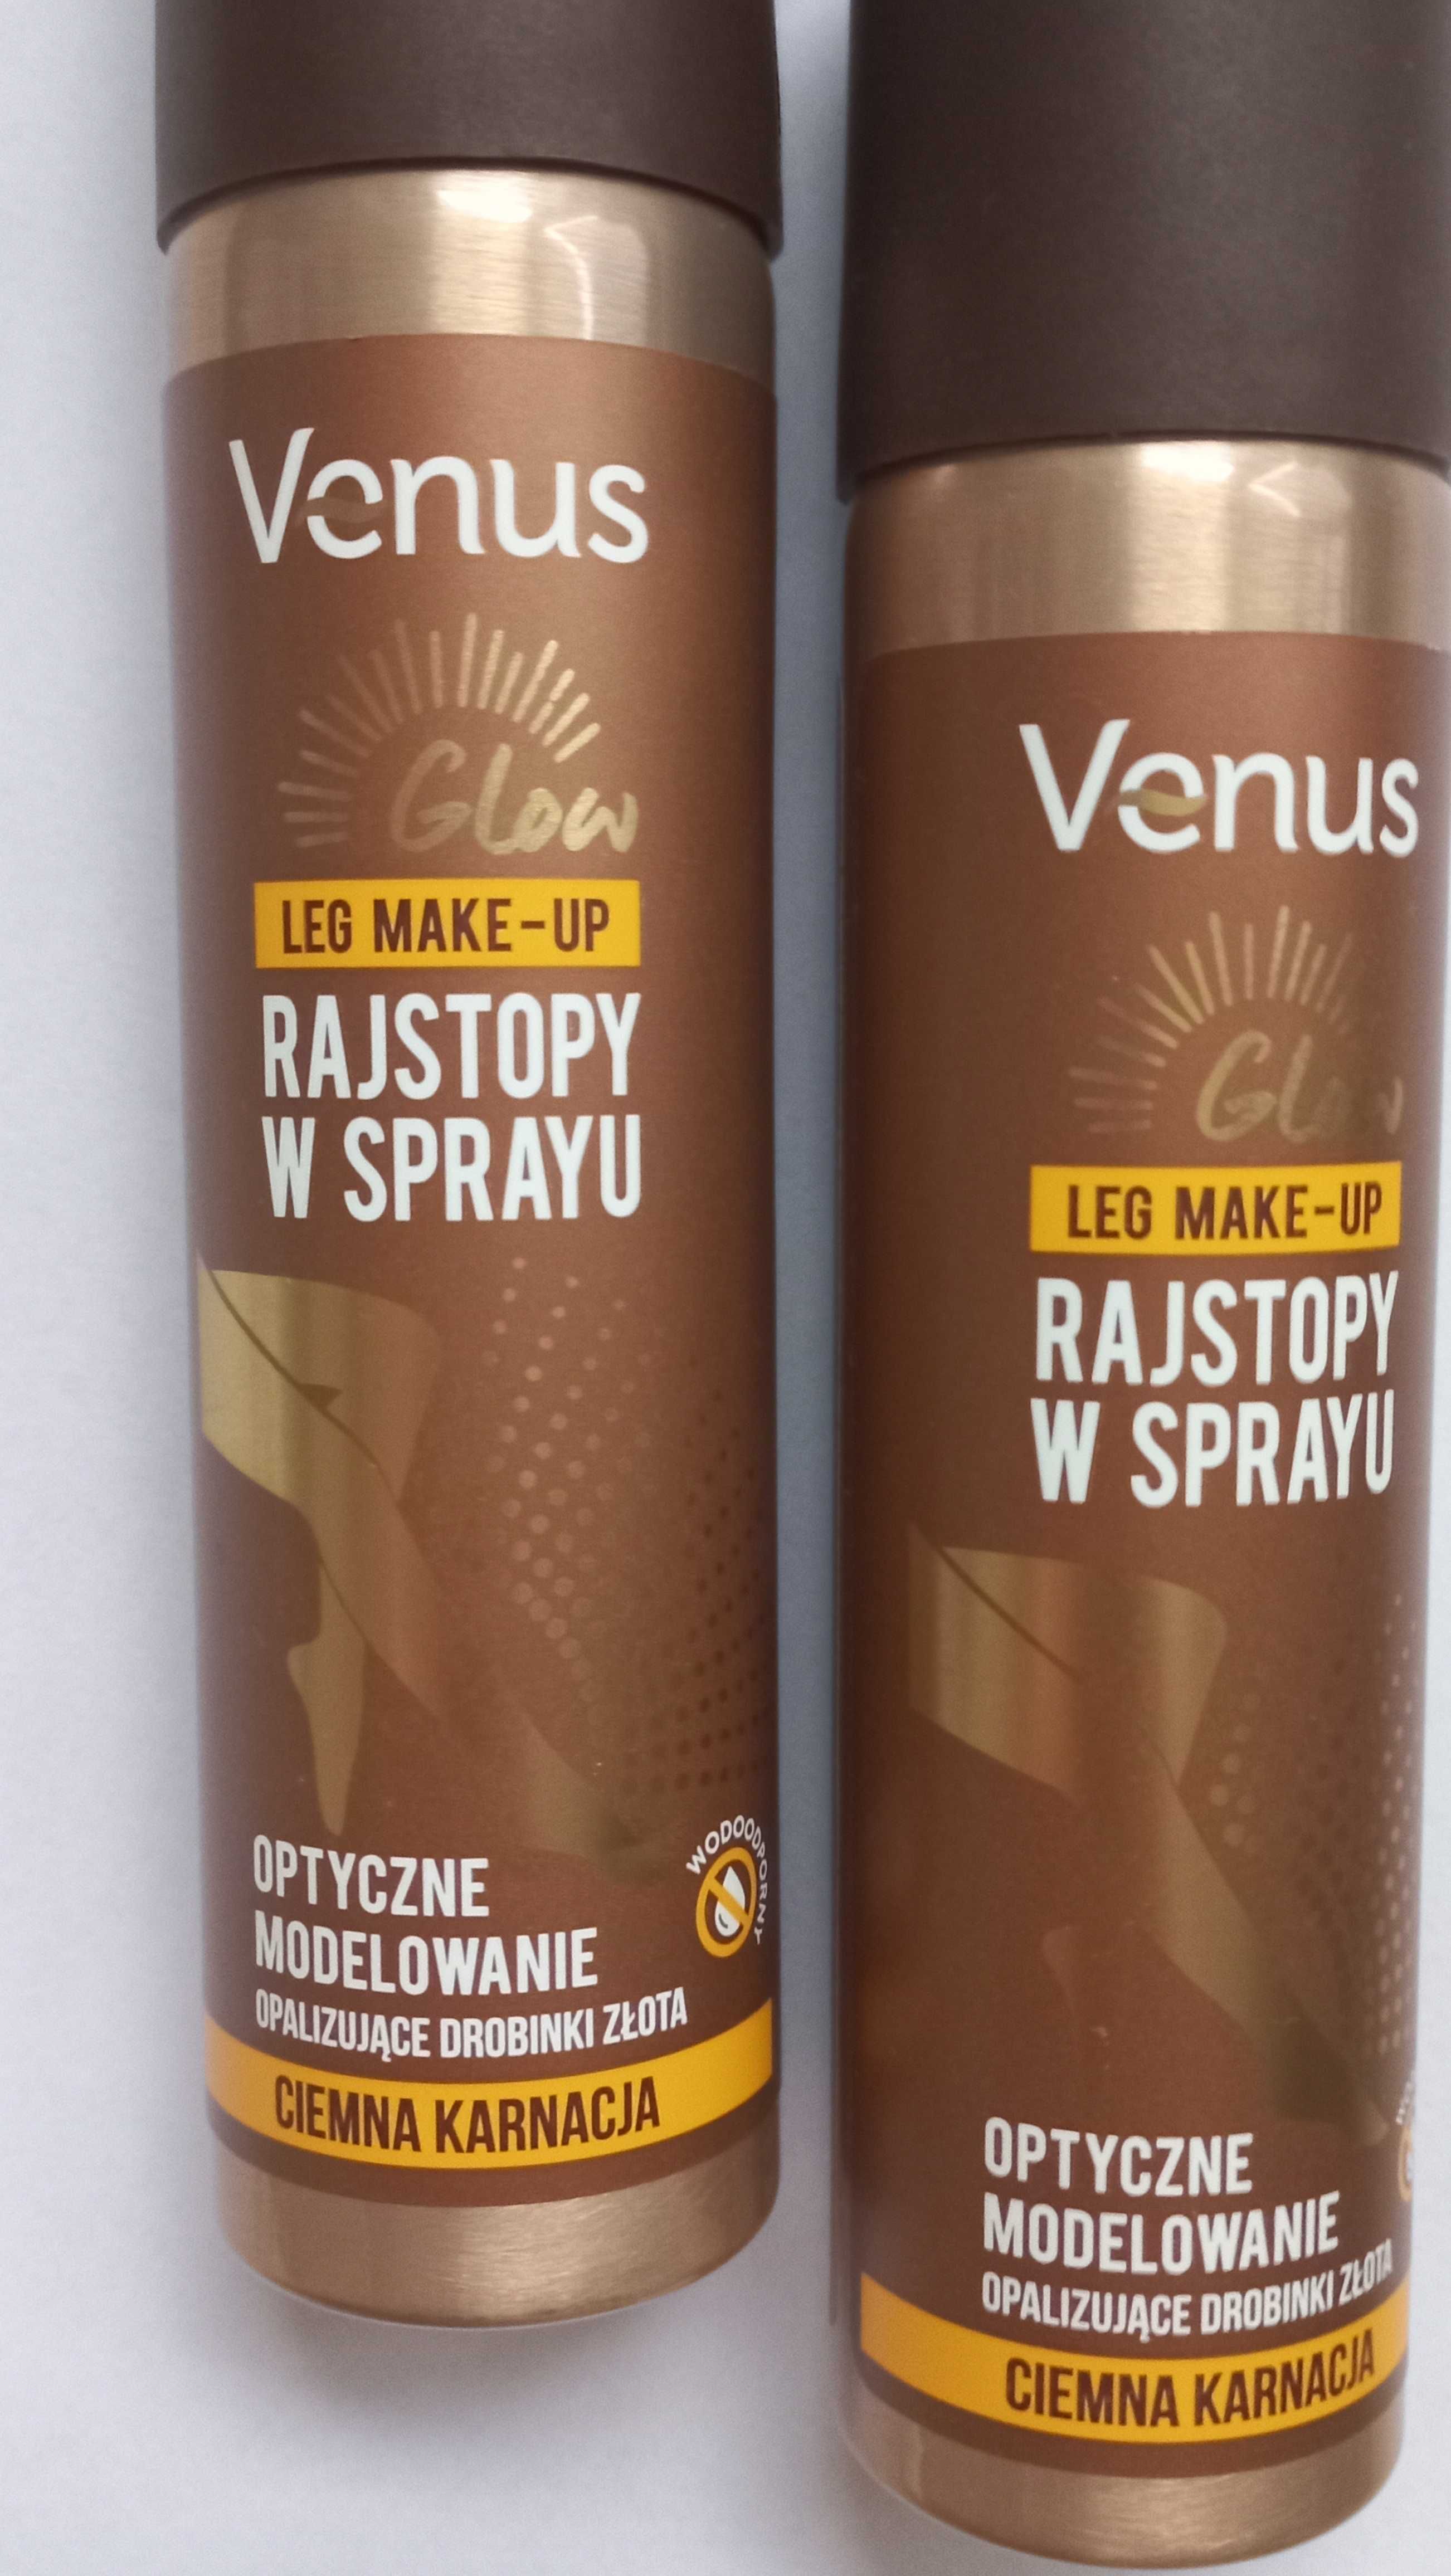 Venus Leg Make-Up rajstopy w sprayu